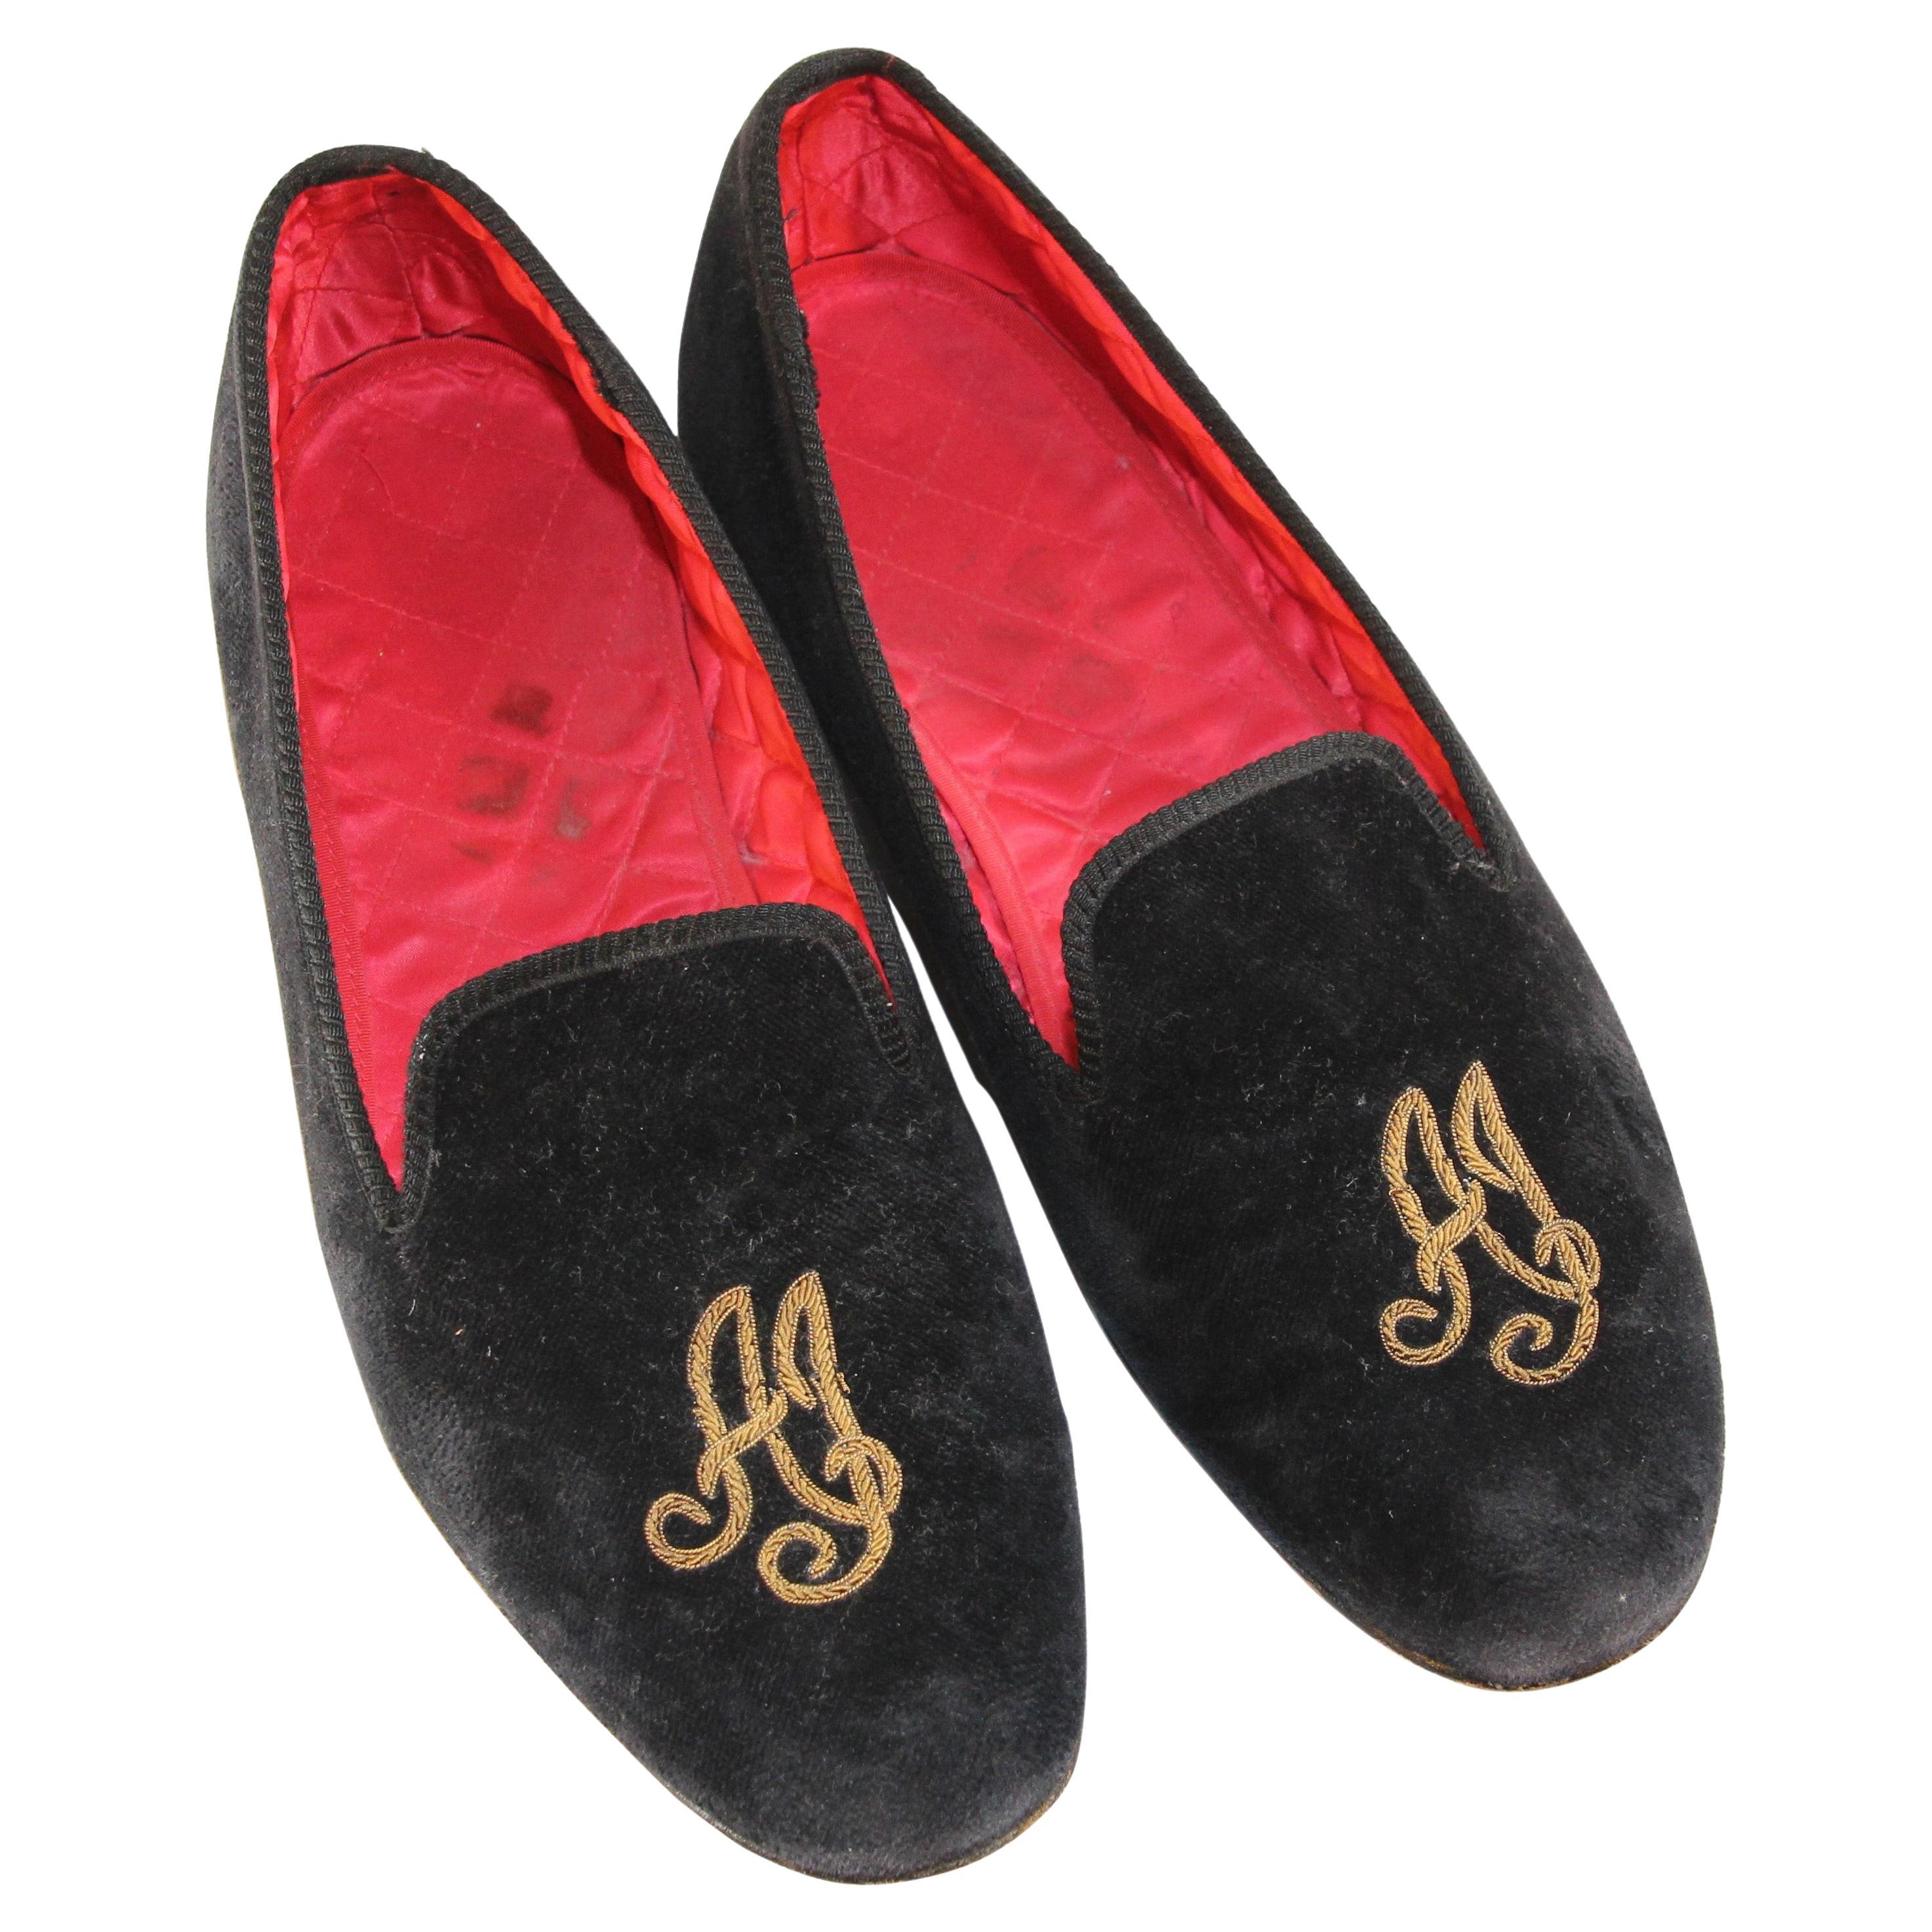 Handmade Men's Black Velvet Loafers with Gold Embroidery